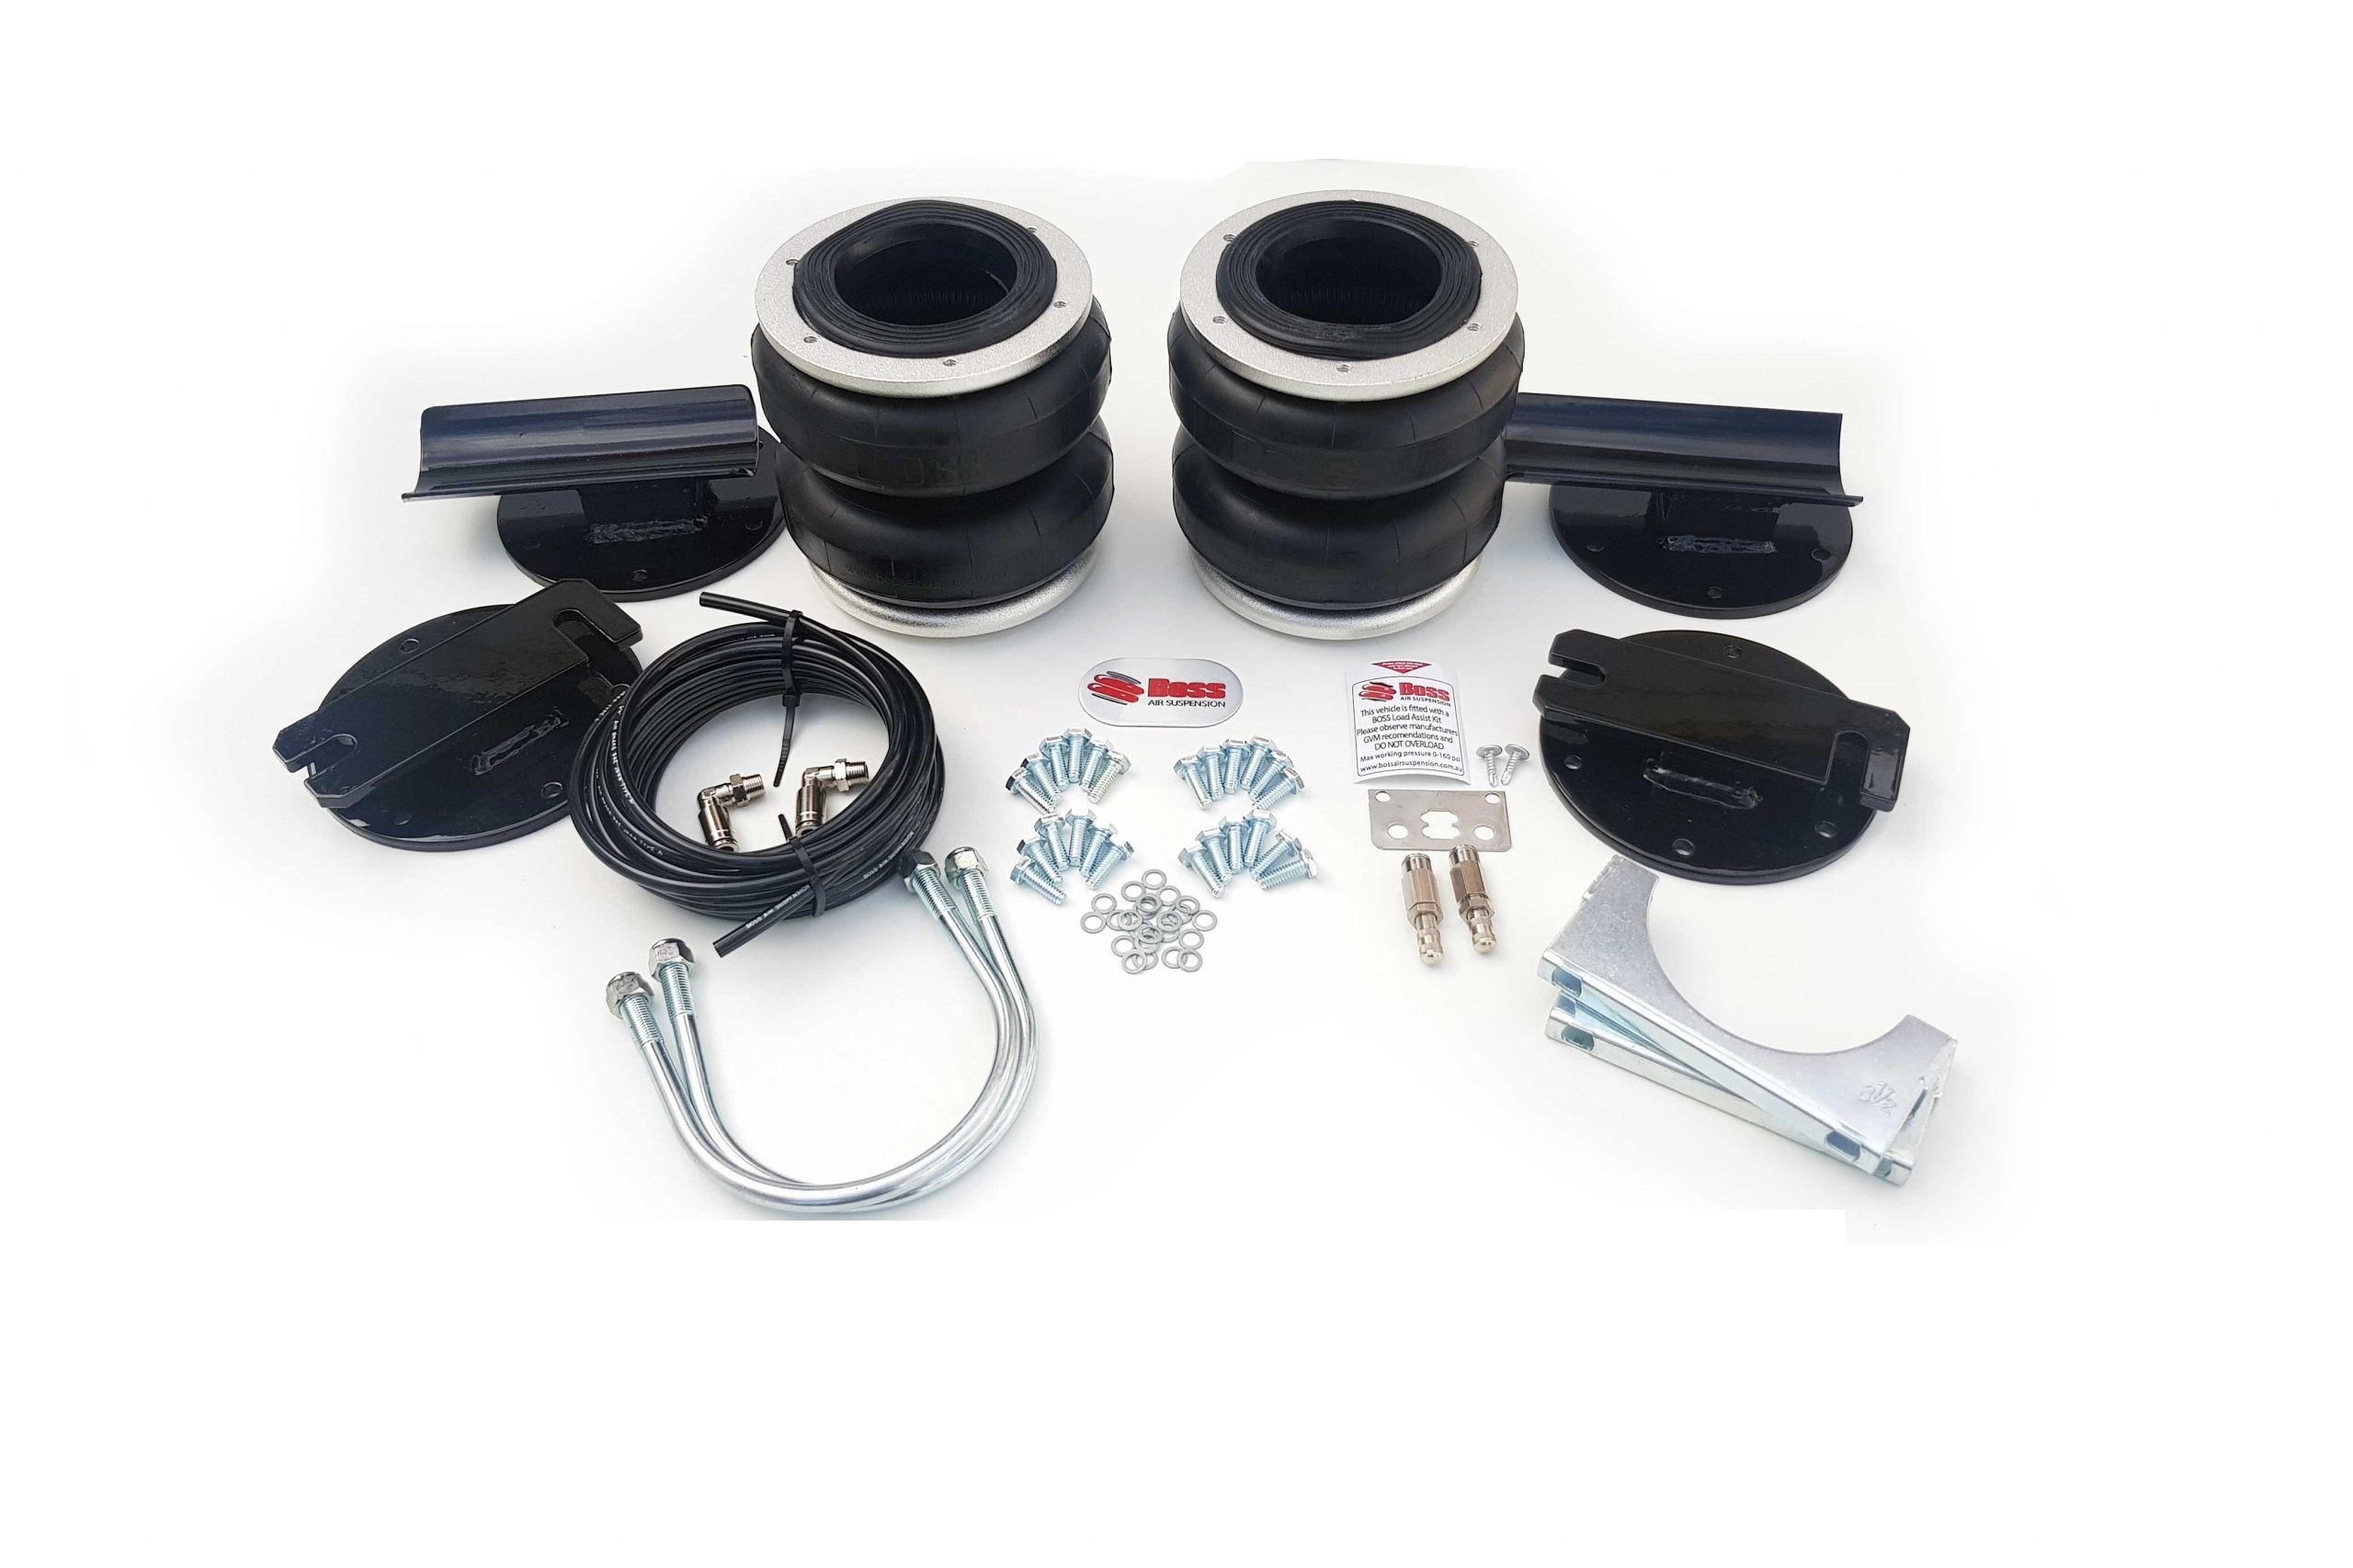 Air bag load assist kit Toyota Prado 120 & 150 coil assist (sits beside coils)